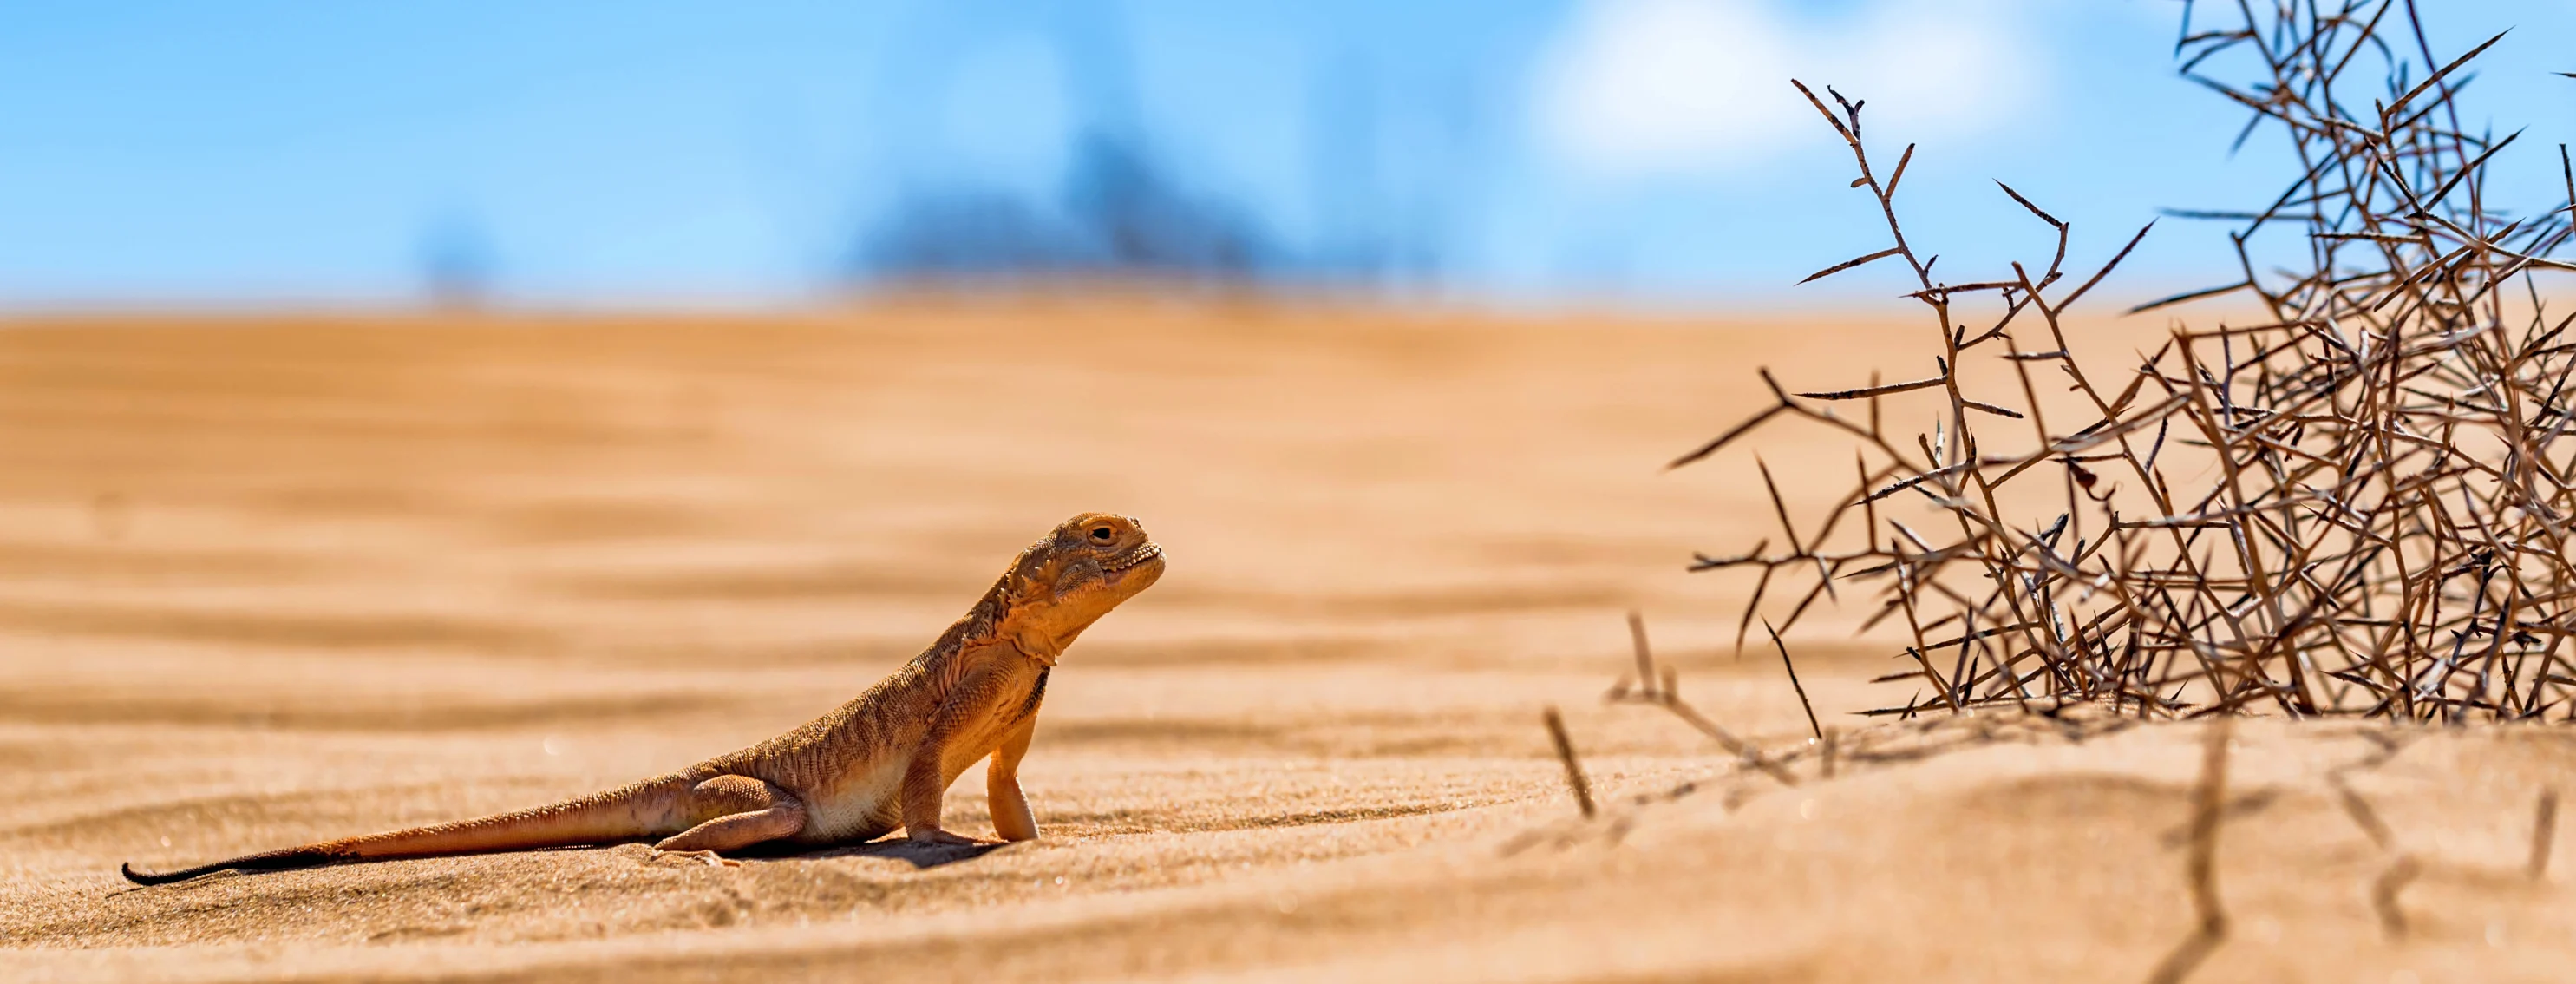 A lizard sits in desert sand